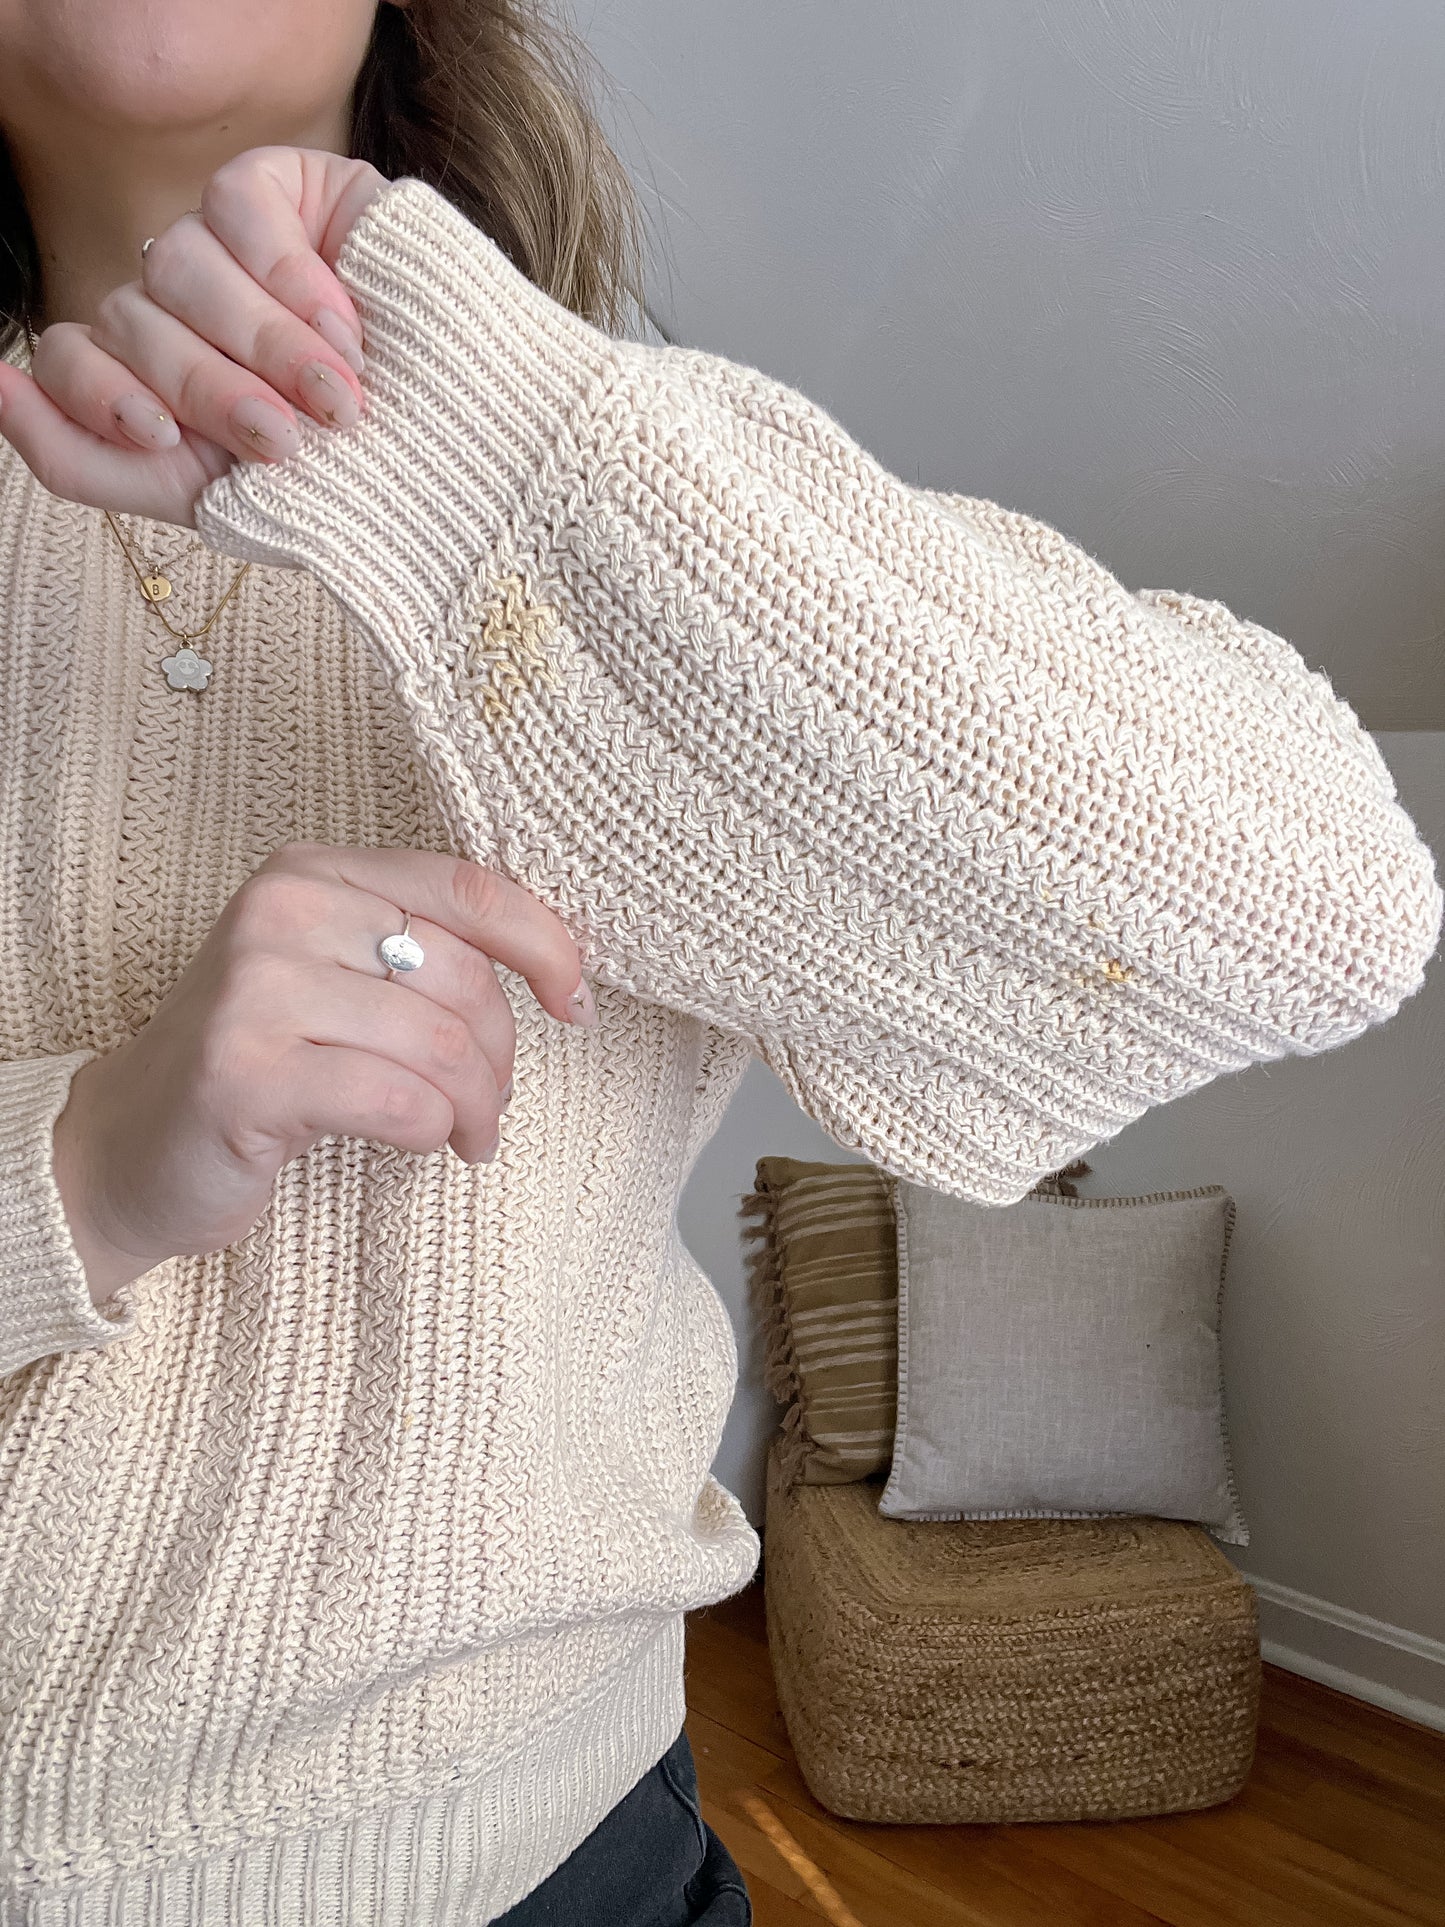 St. Johns Bay Ramie/Cotton Sweater (M)